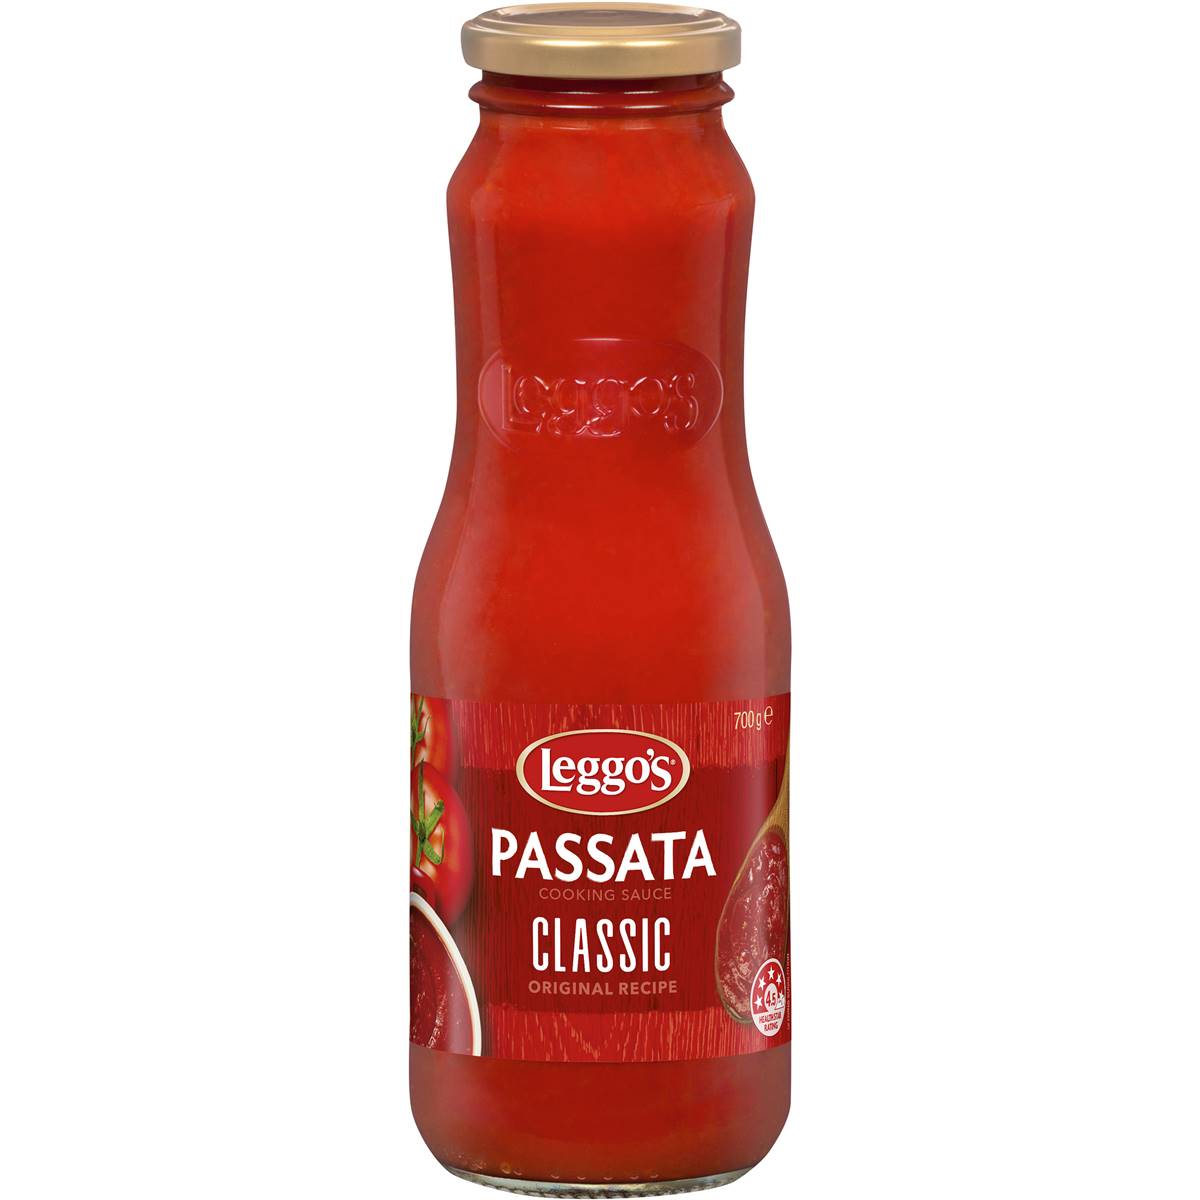 Leggos Classic Tomato Passata Sauce 700g